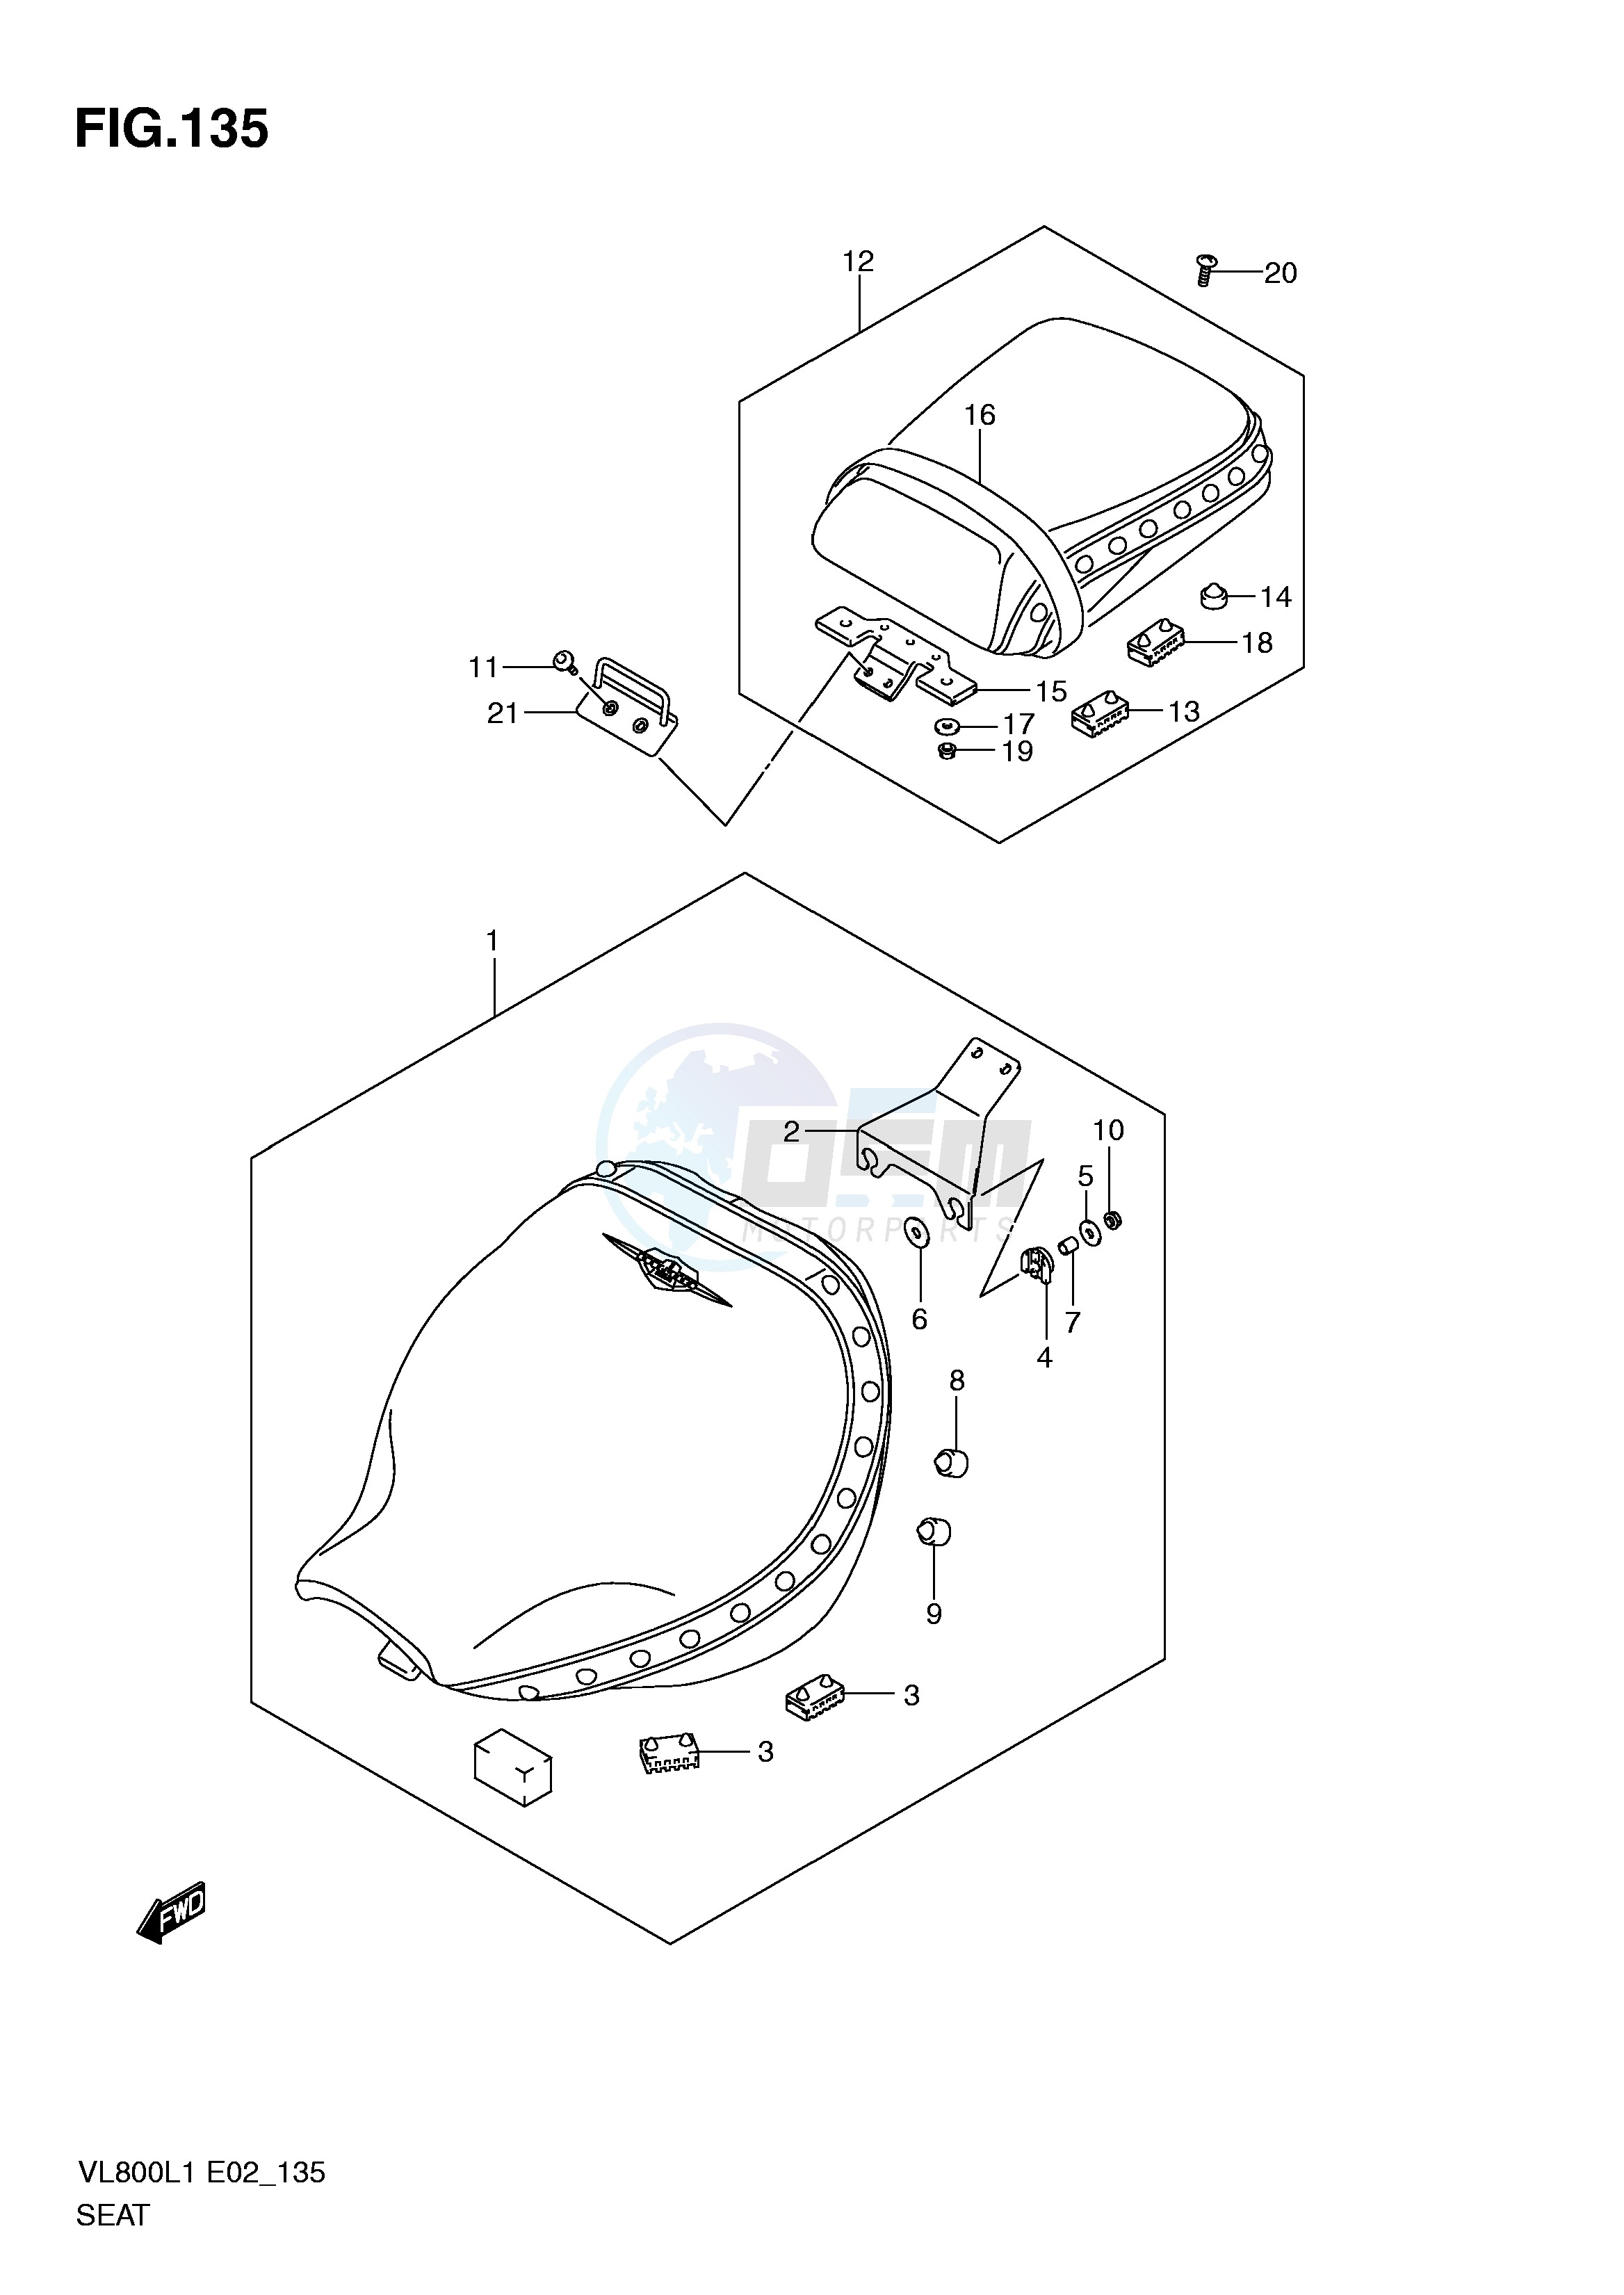 SEAT (VL800TL1 E24) blueprint